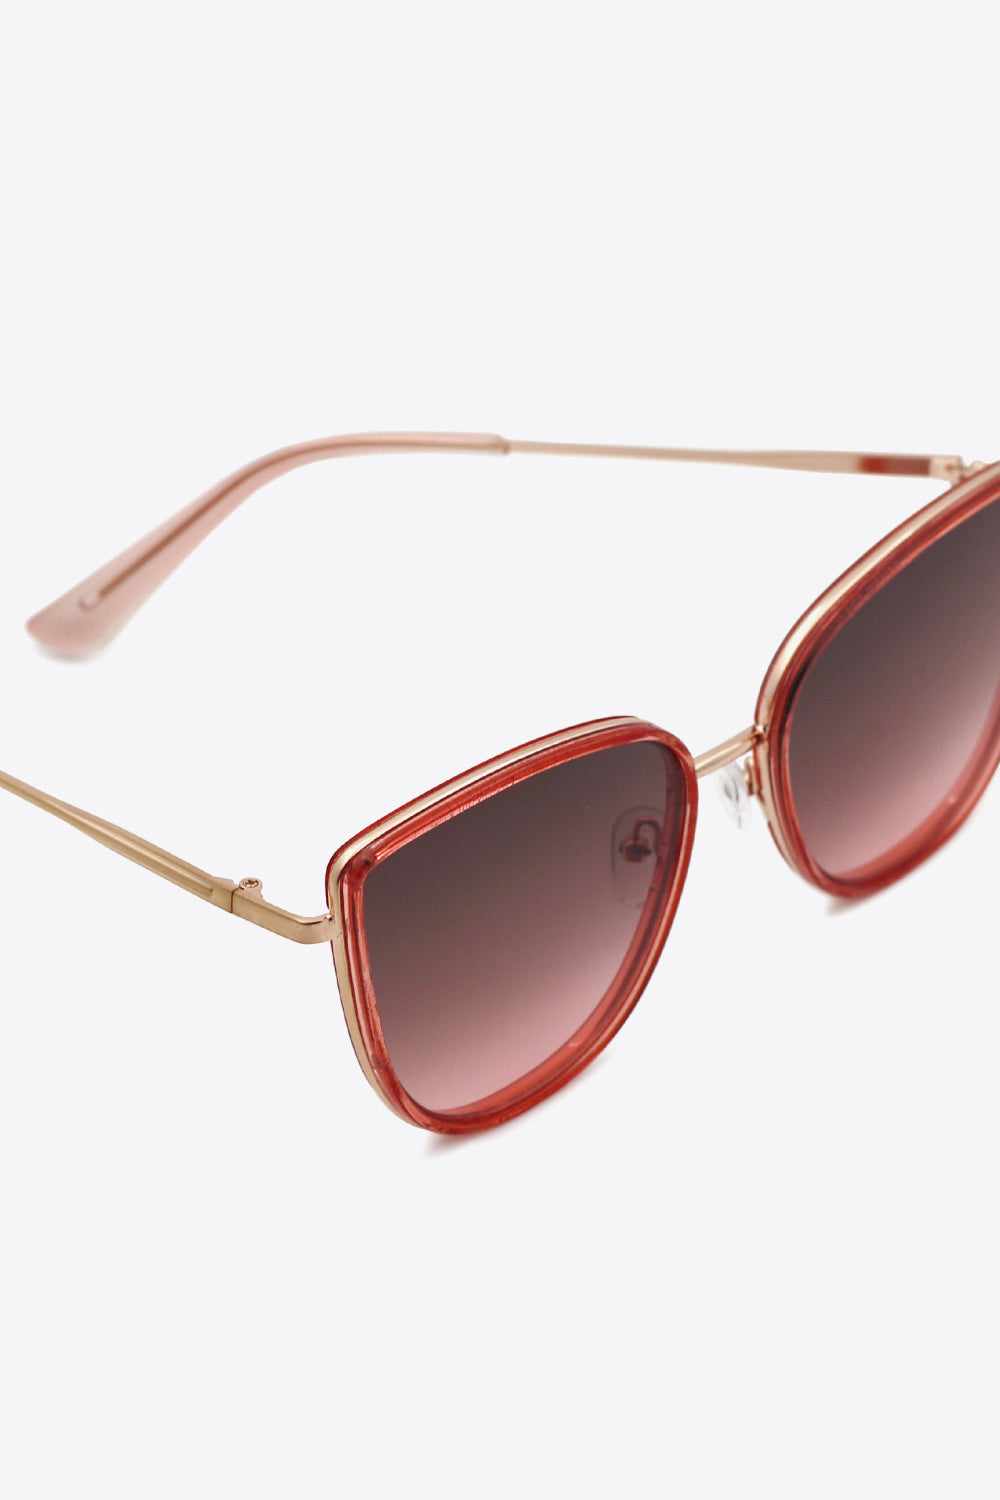 Full Rim Metal-Plastic Hybrid Frame Sunglasses - BEAUTY COSMOTICS SHOP